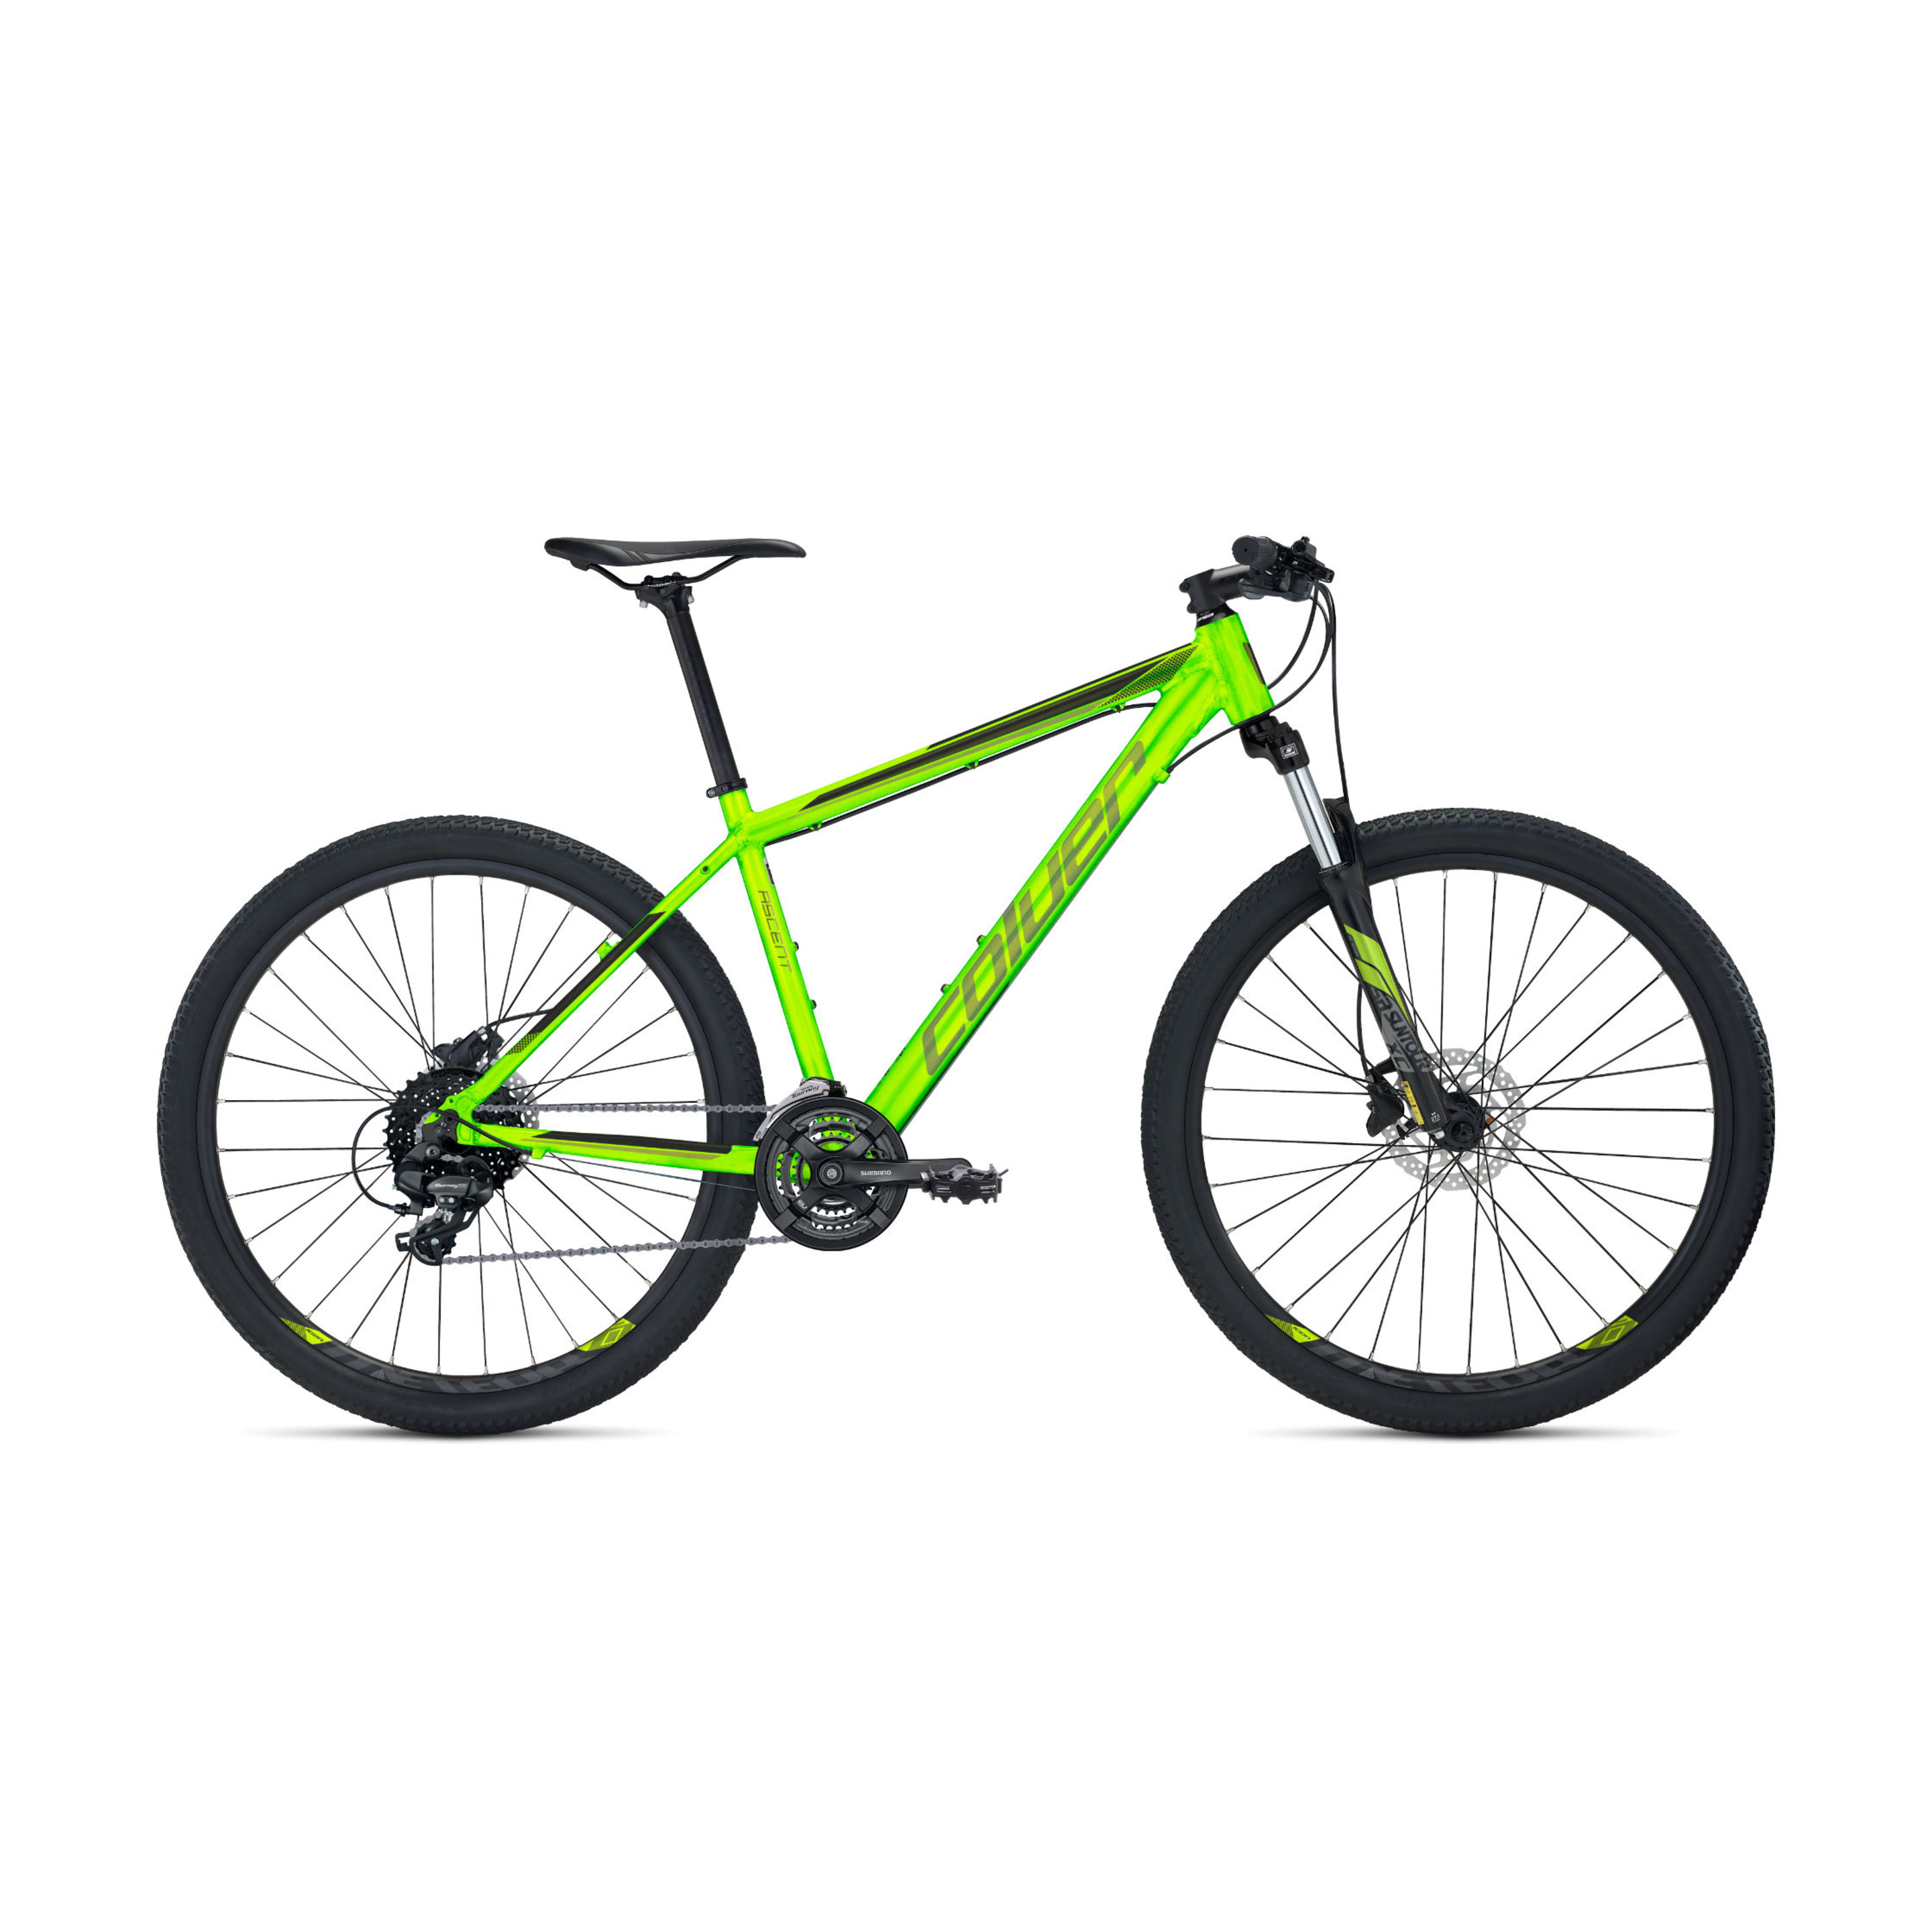 Bicicleta Mtb Coluer Ascent 293 - verde - 